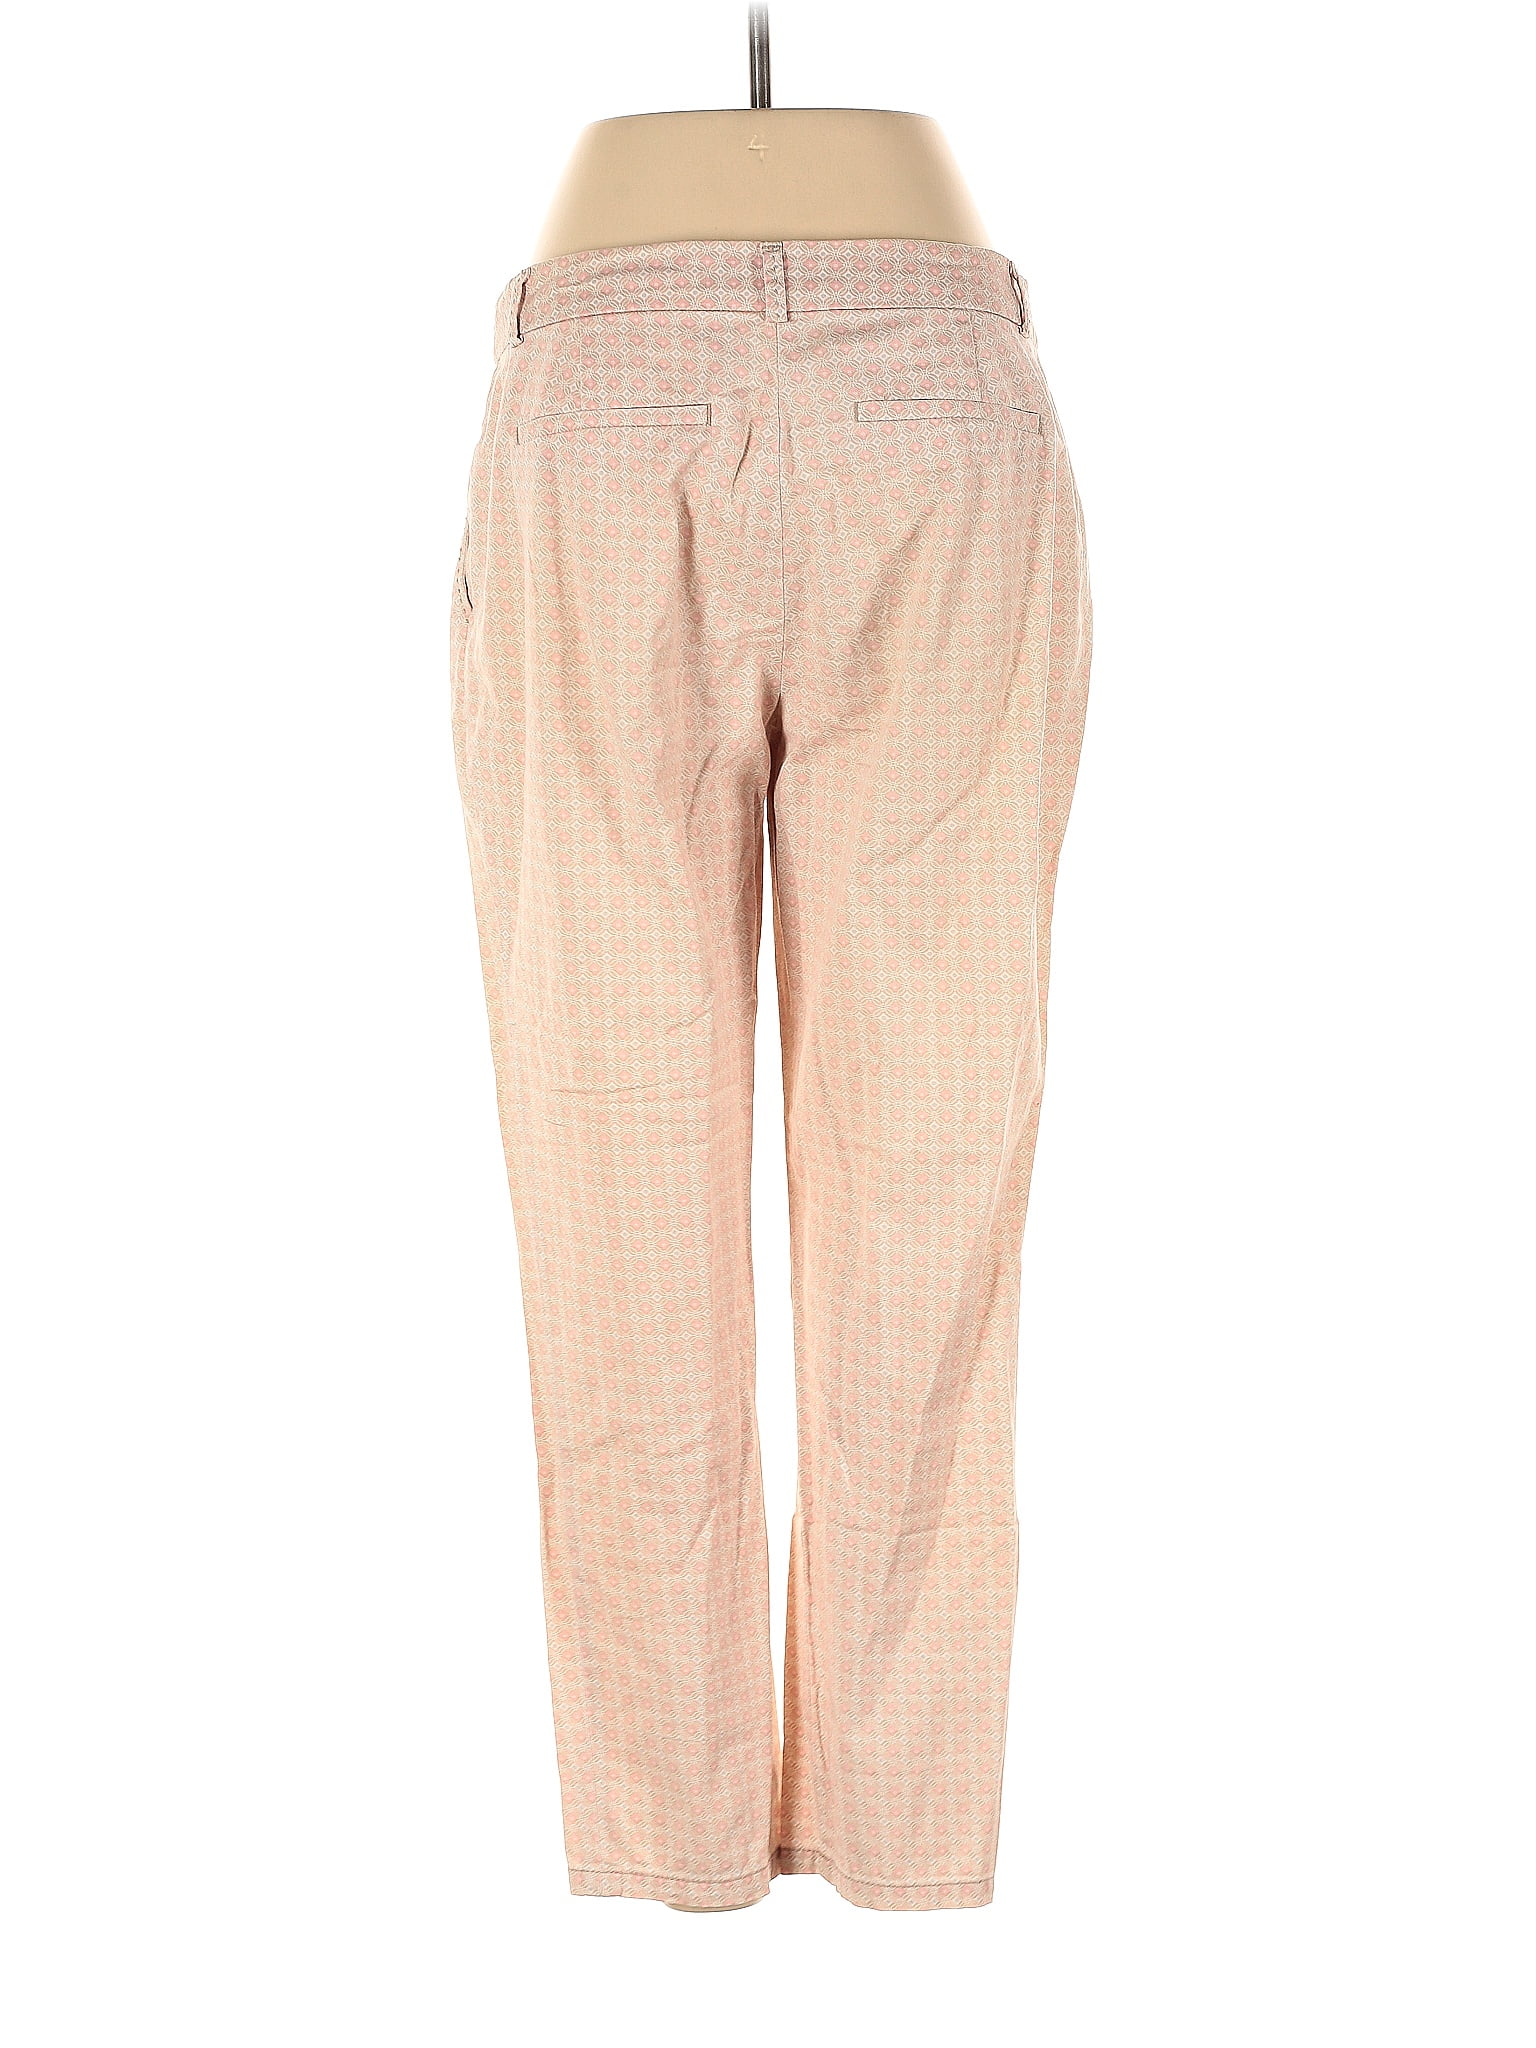 Assorted Brands Grid Tan Casual Pants Size 36 (EU) - 58% off